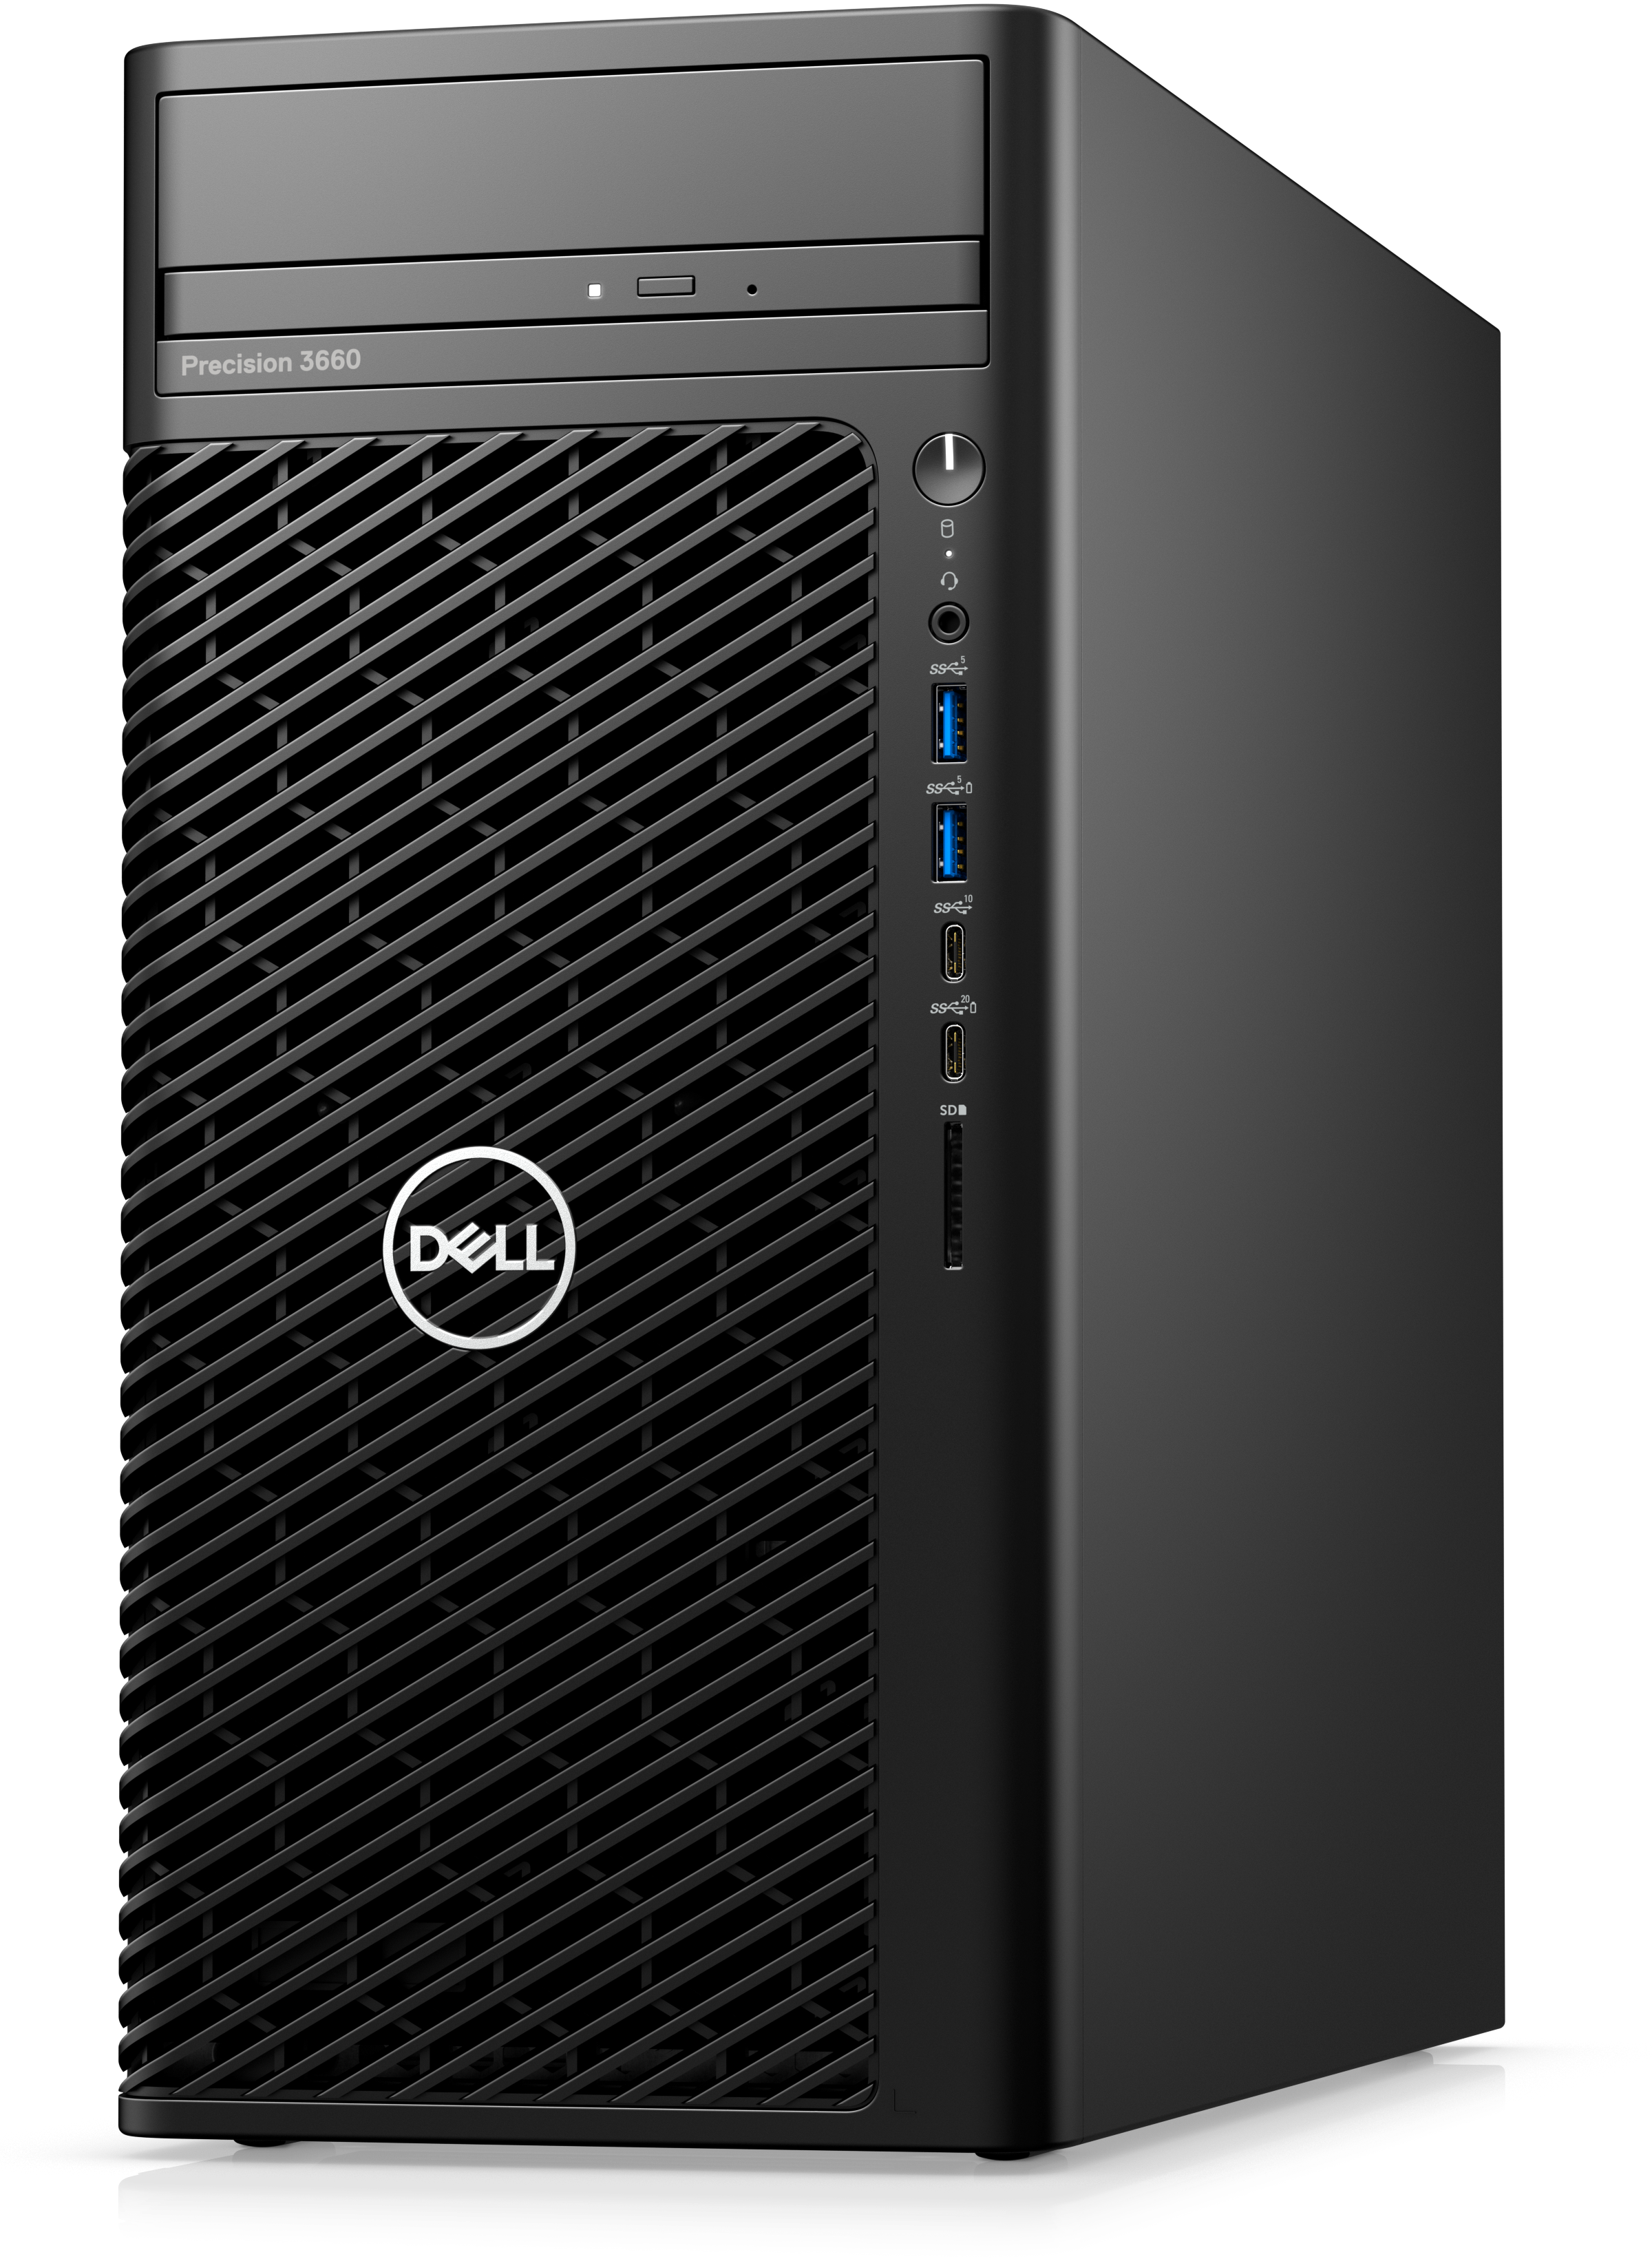 Dell Precision 3660 Tower Workstation, 12th Generation Intel Core i7-12700, 16GB RAM, 512 SSD, No Monitor, DVDRW, 3 Yrs PS, 500W, Windows 10 Pro